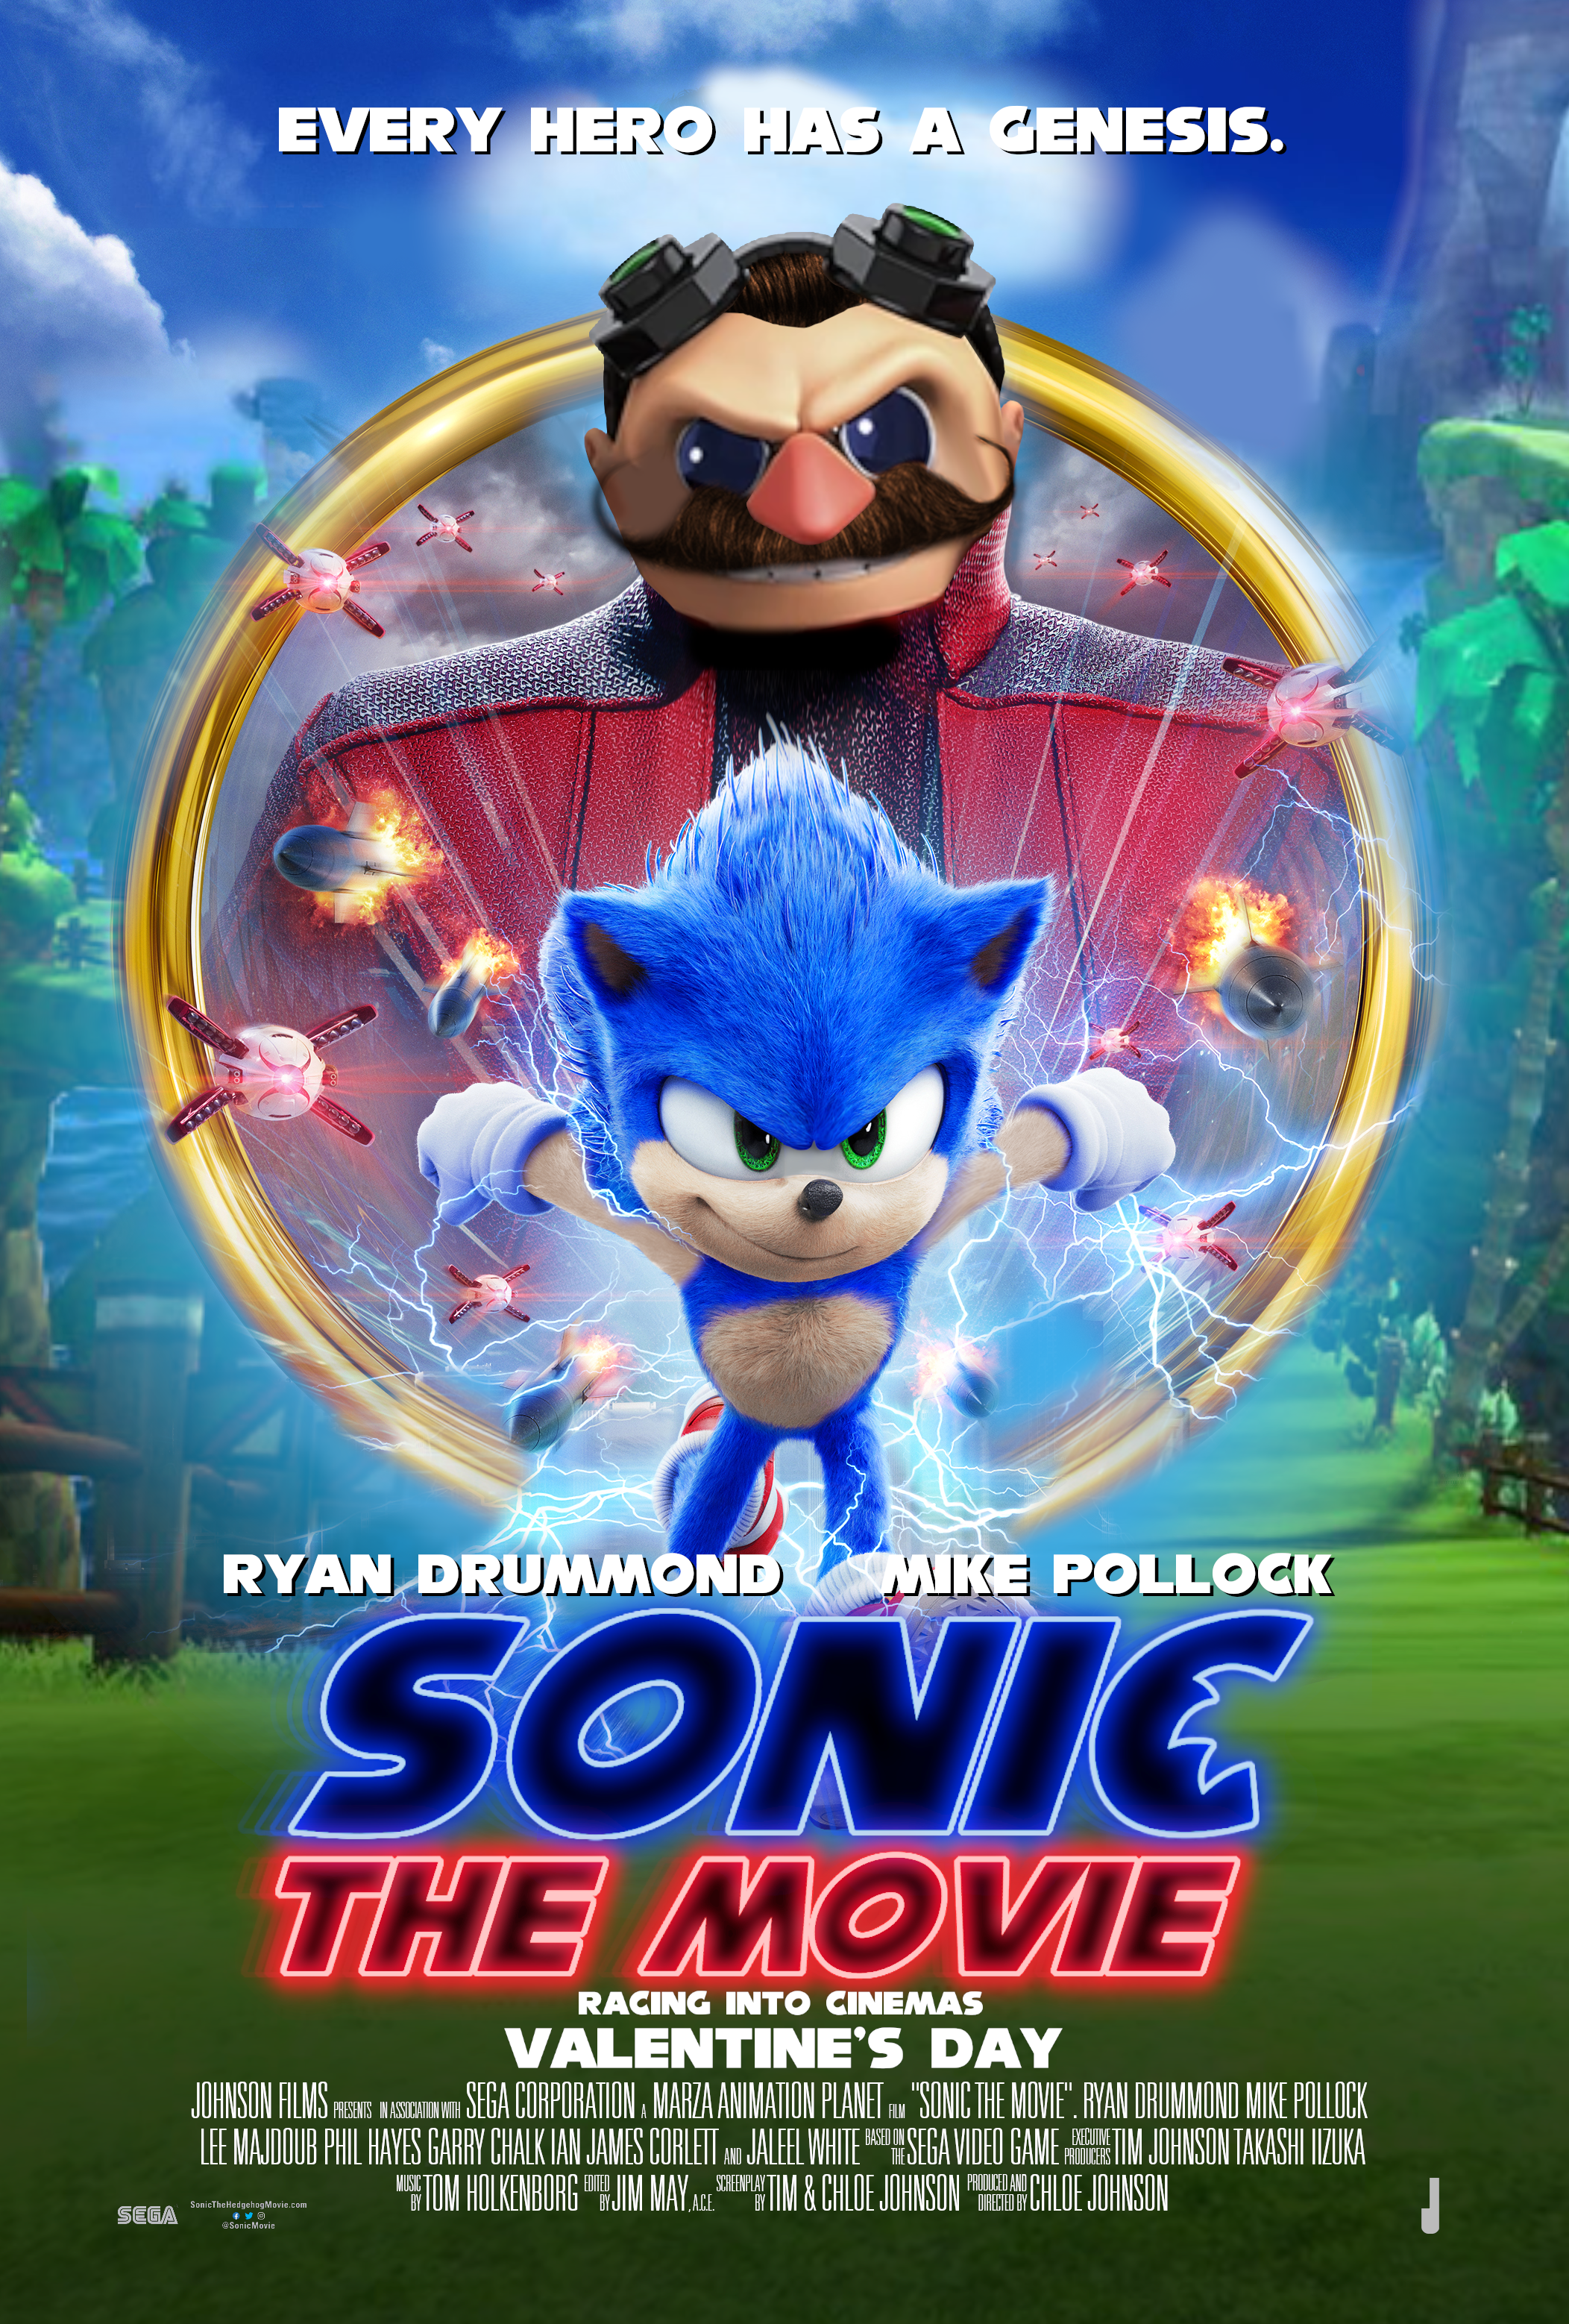 Sonic - O Filme - Em breve - My Family Cinema